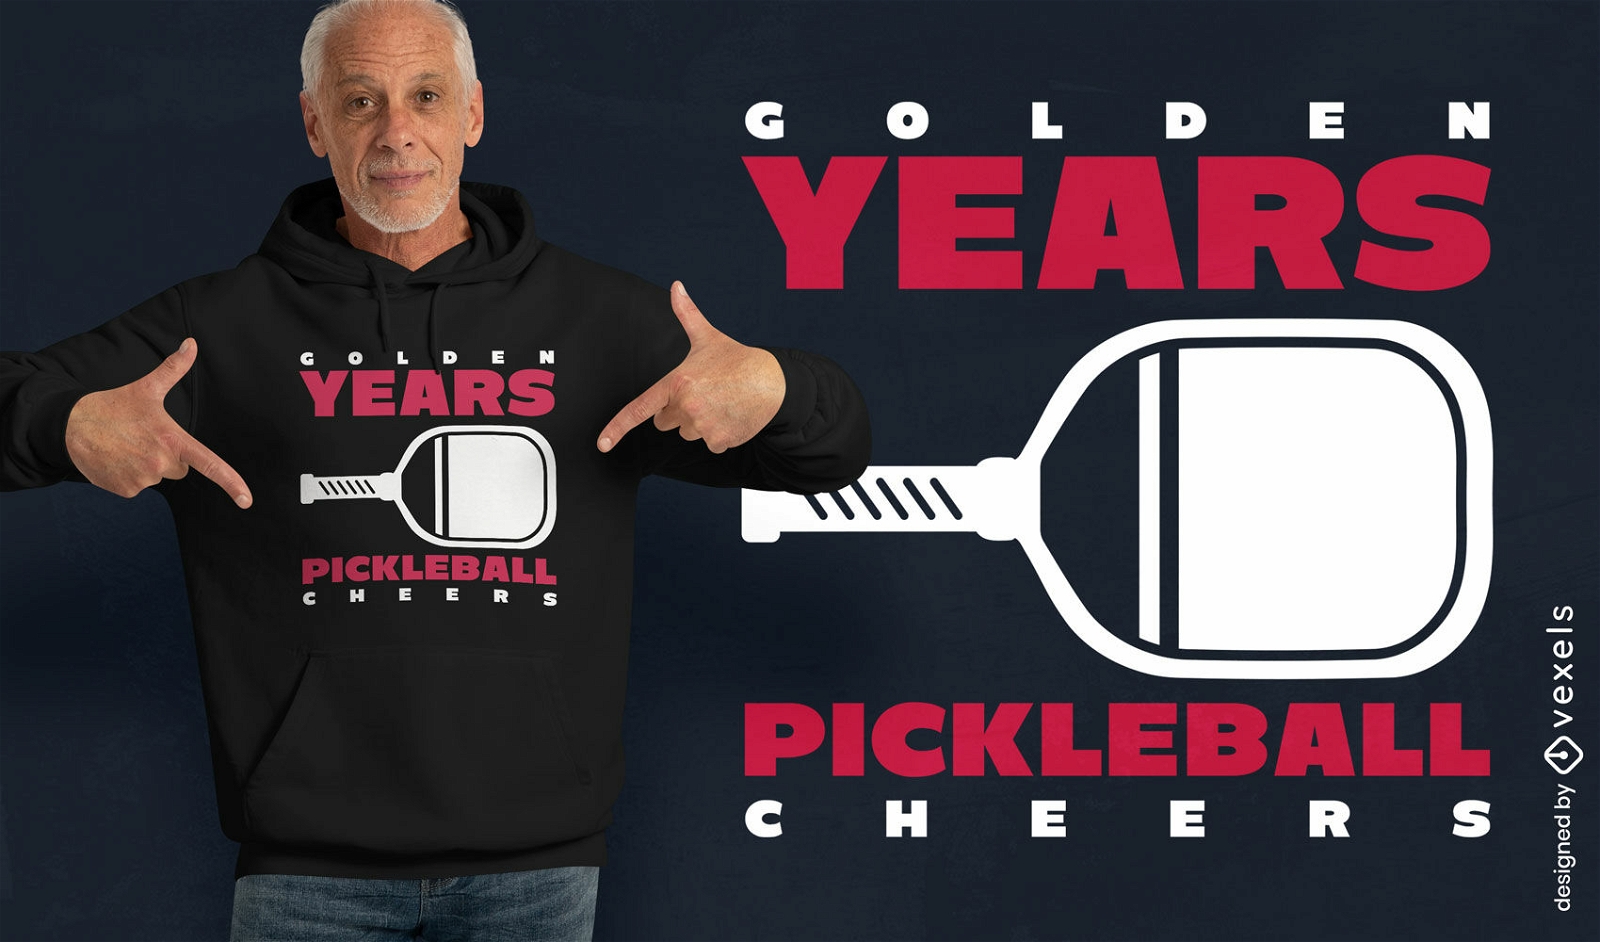 Golden years pickleball t-shirt design